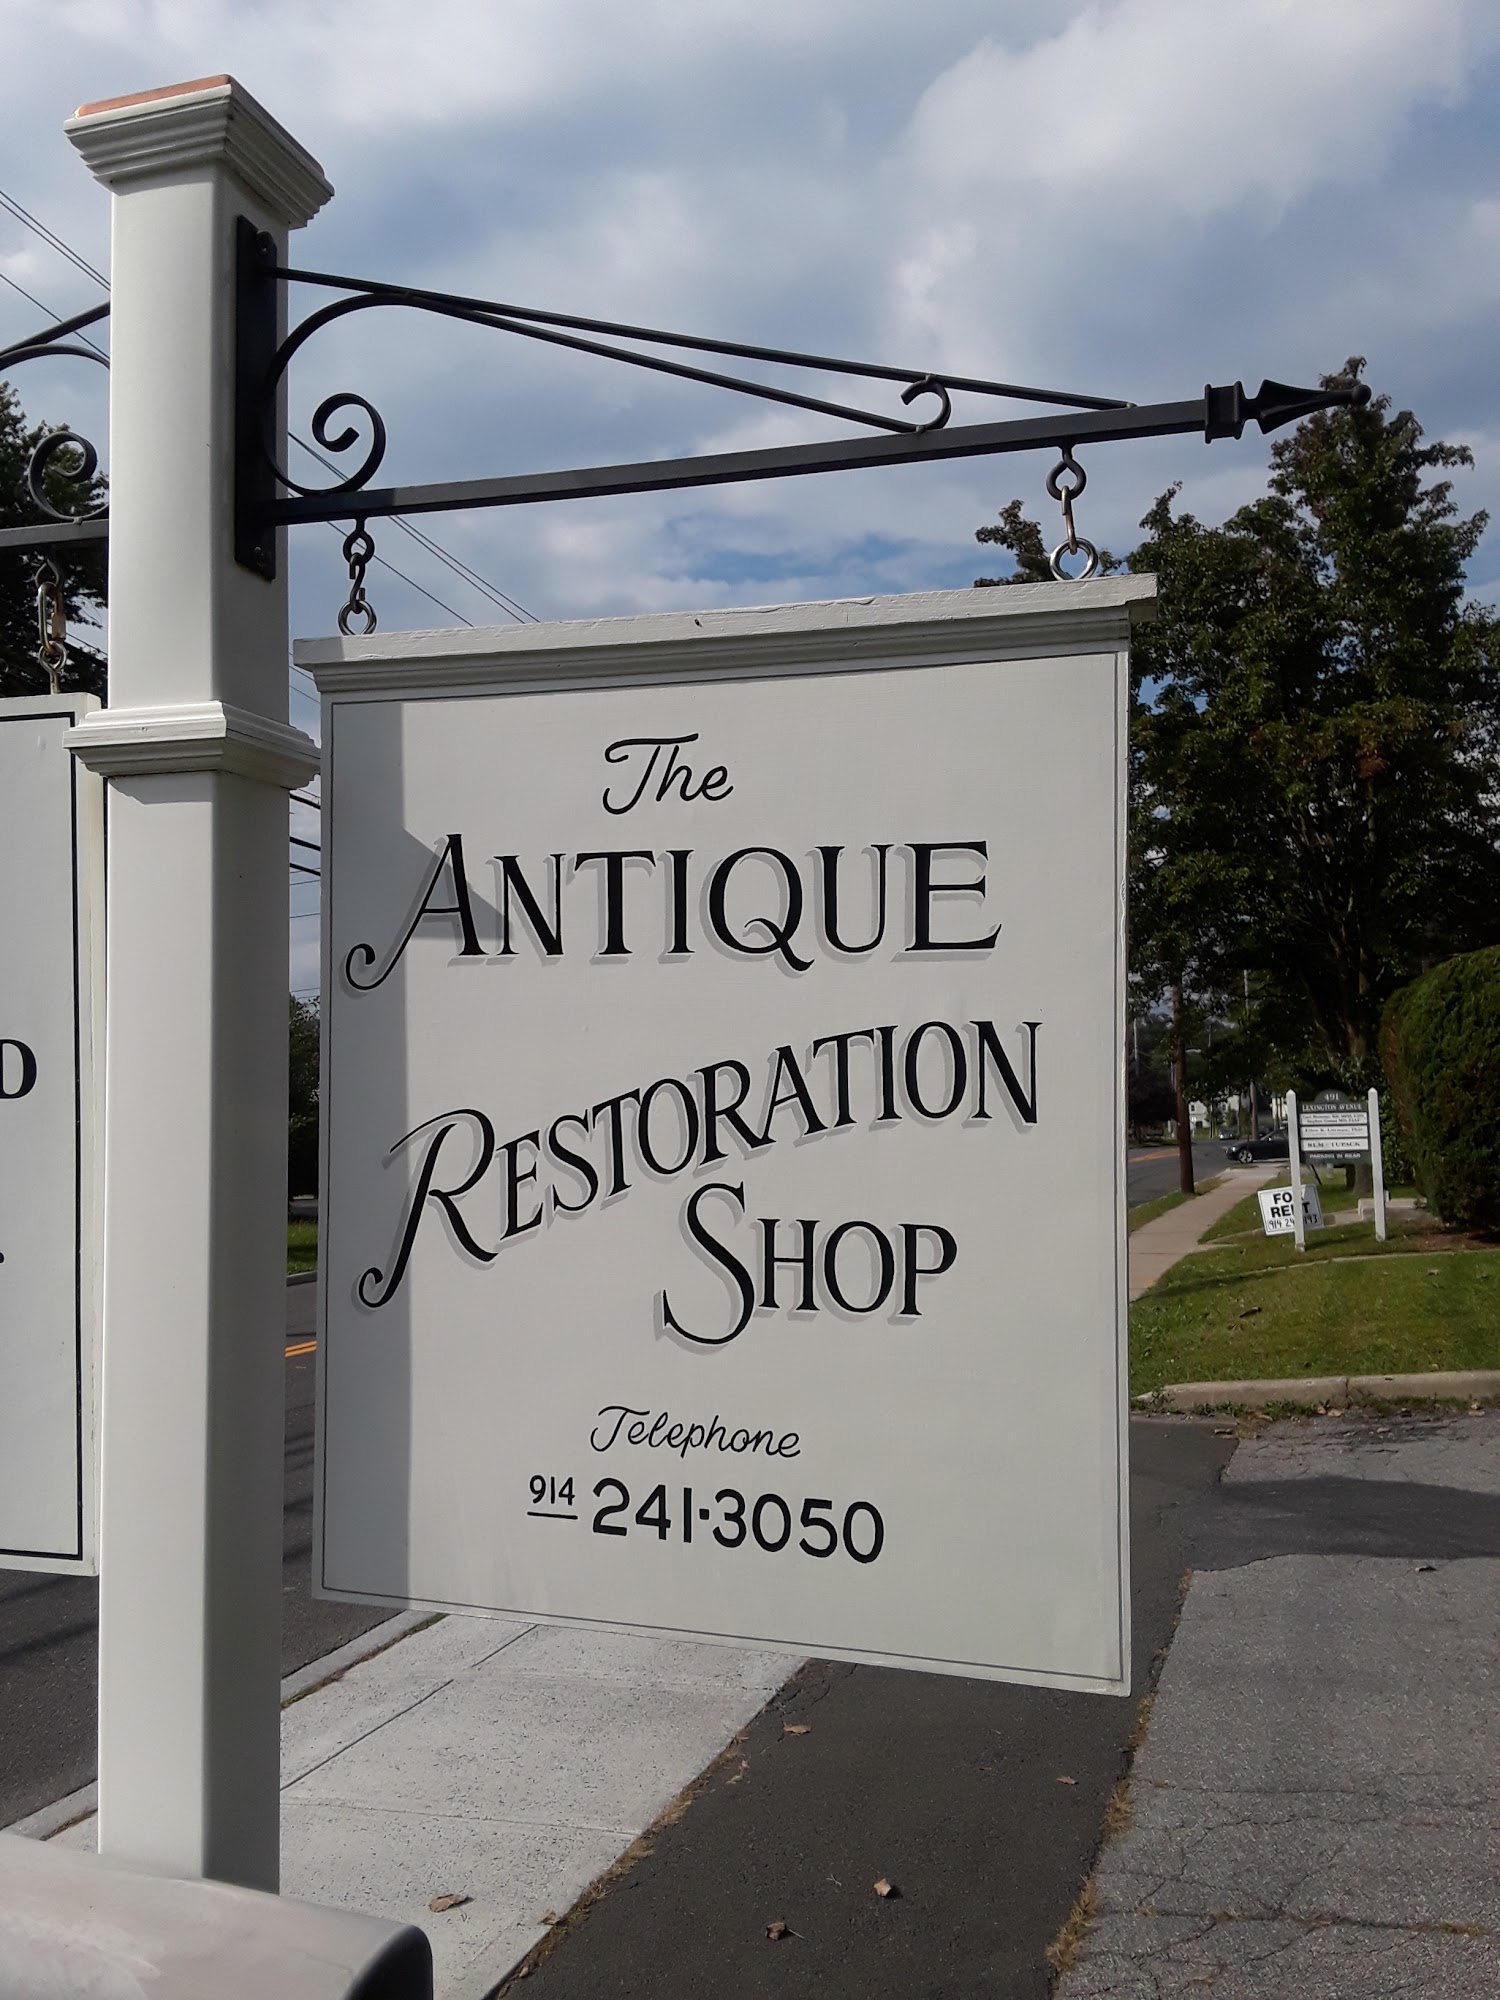 Restoration Shop